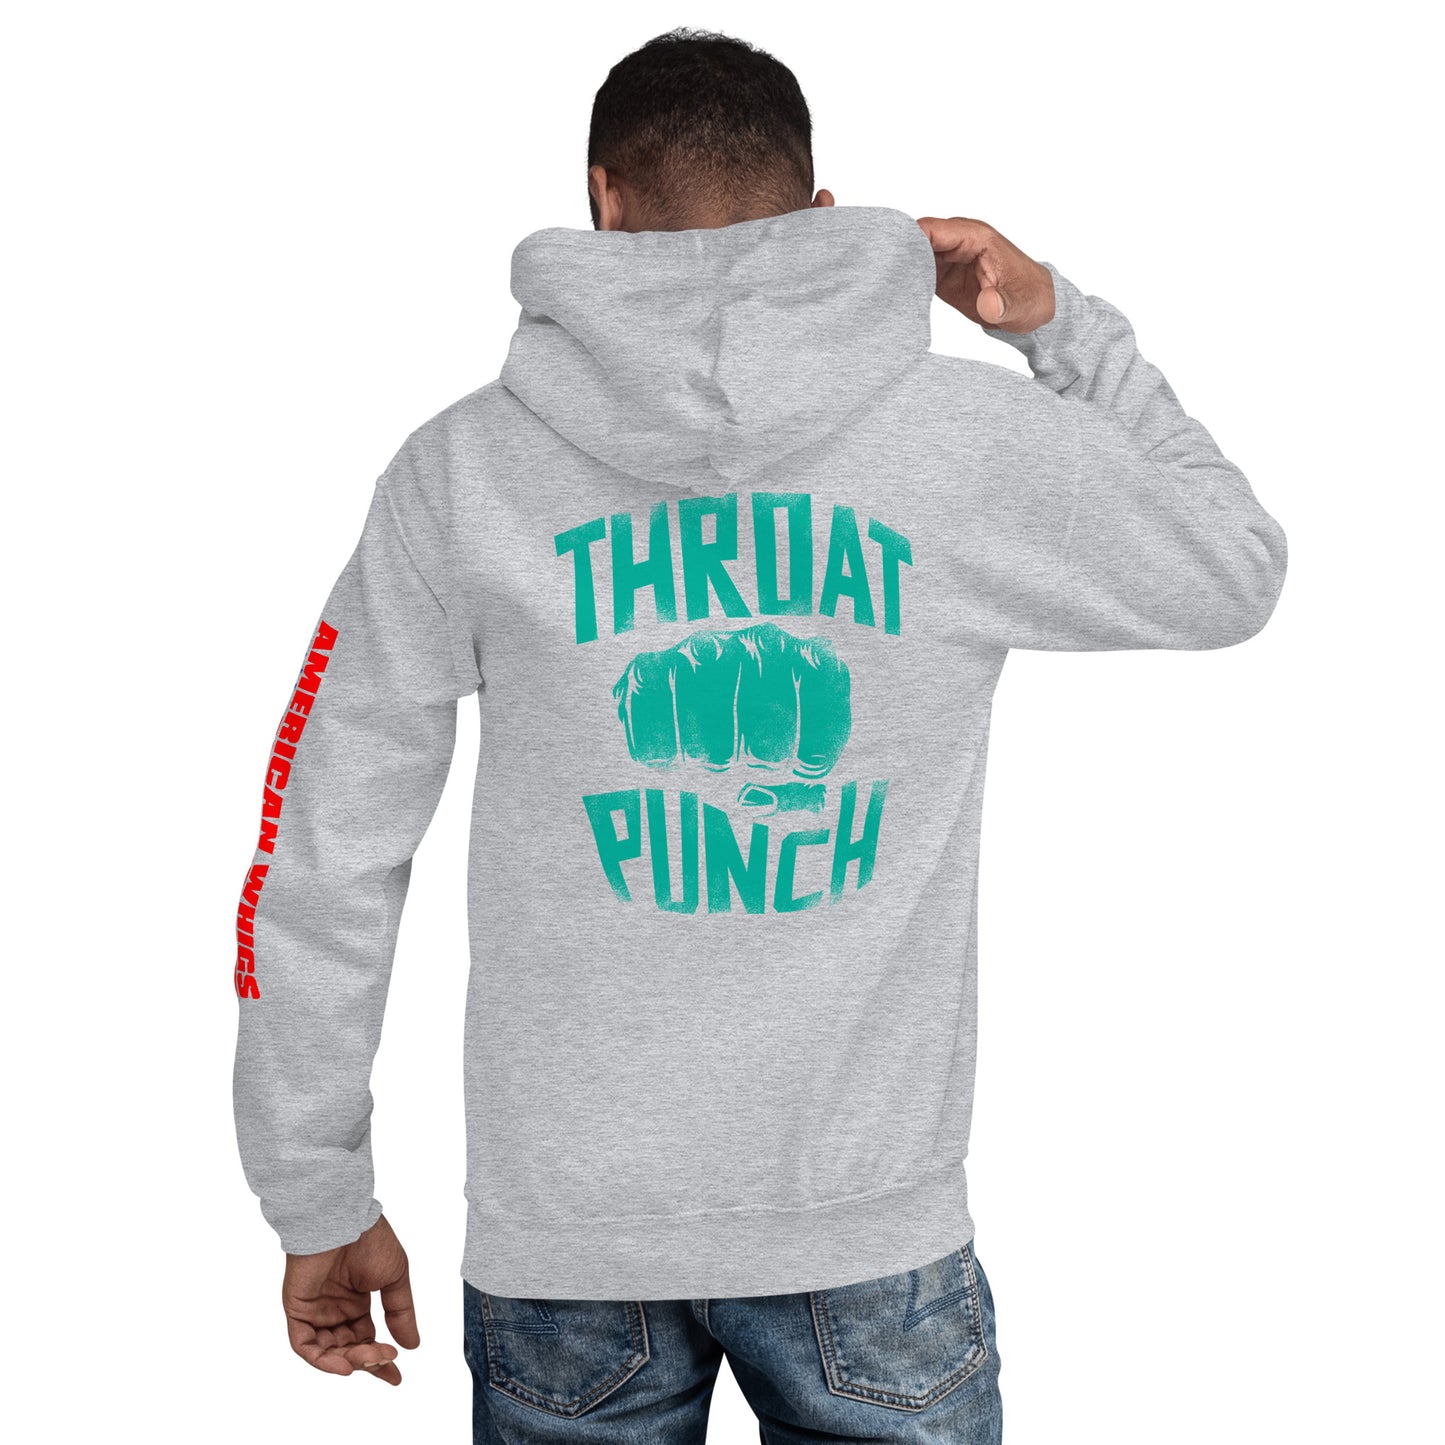 Throat Punch Unisex Hoodie